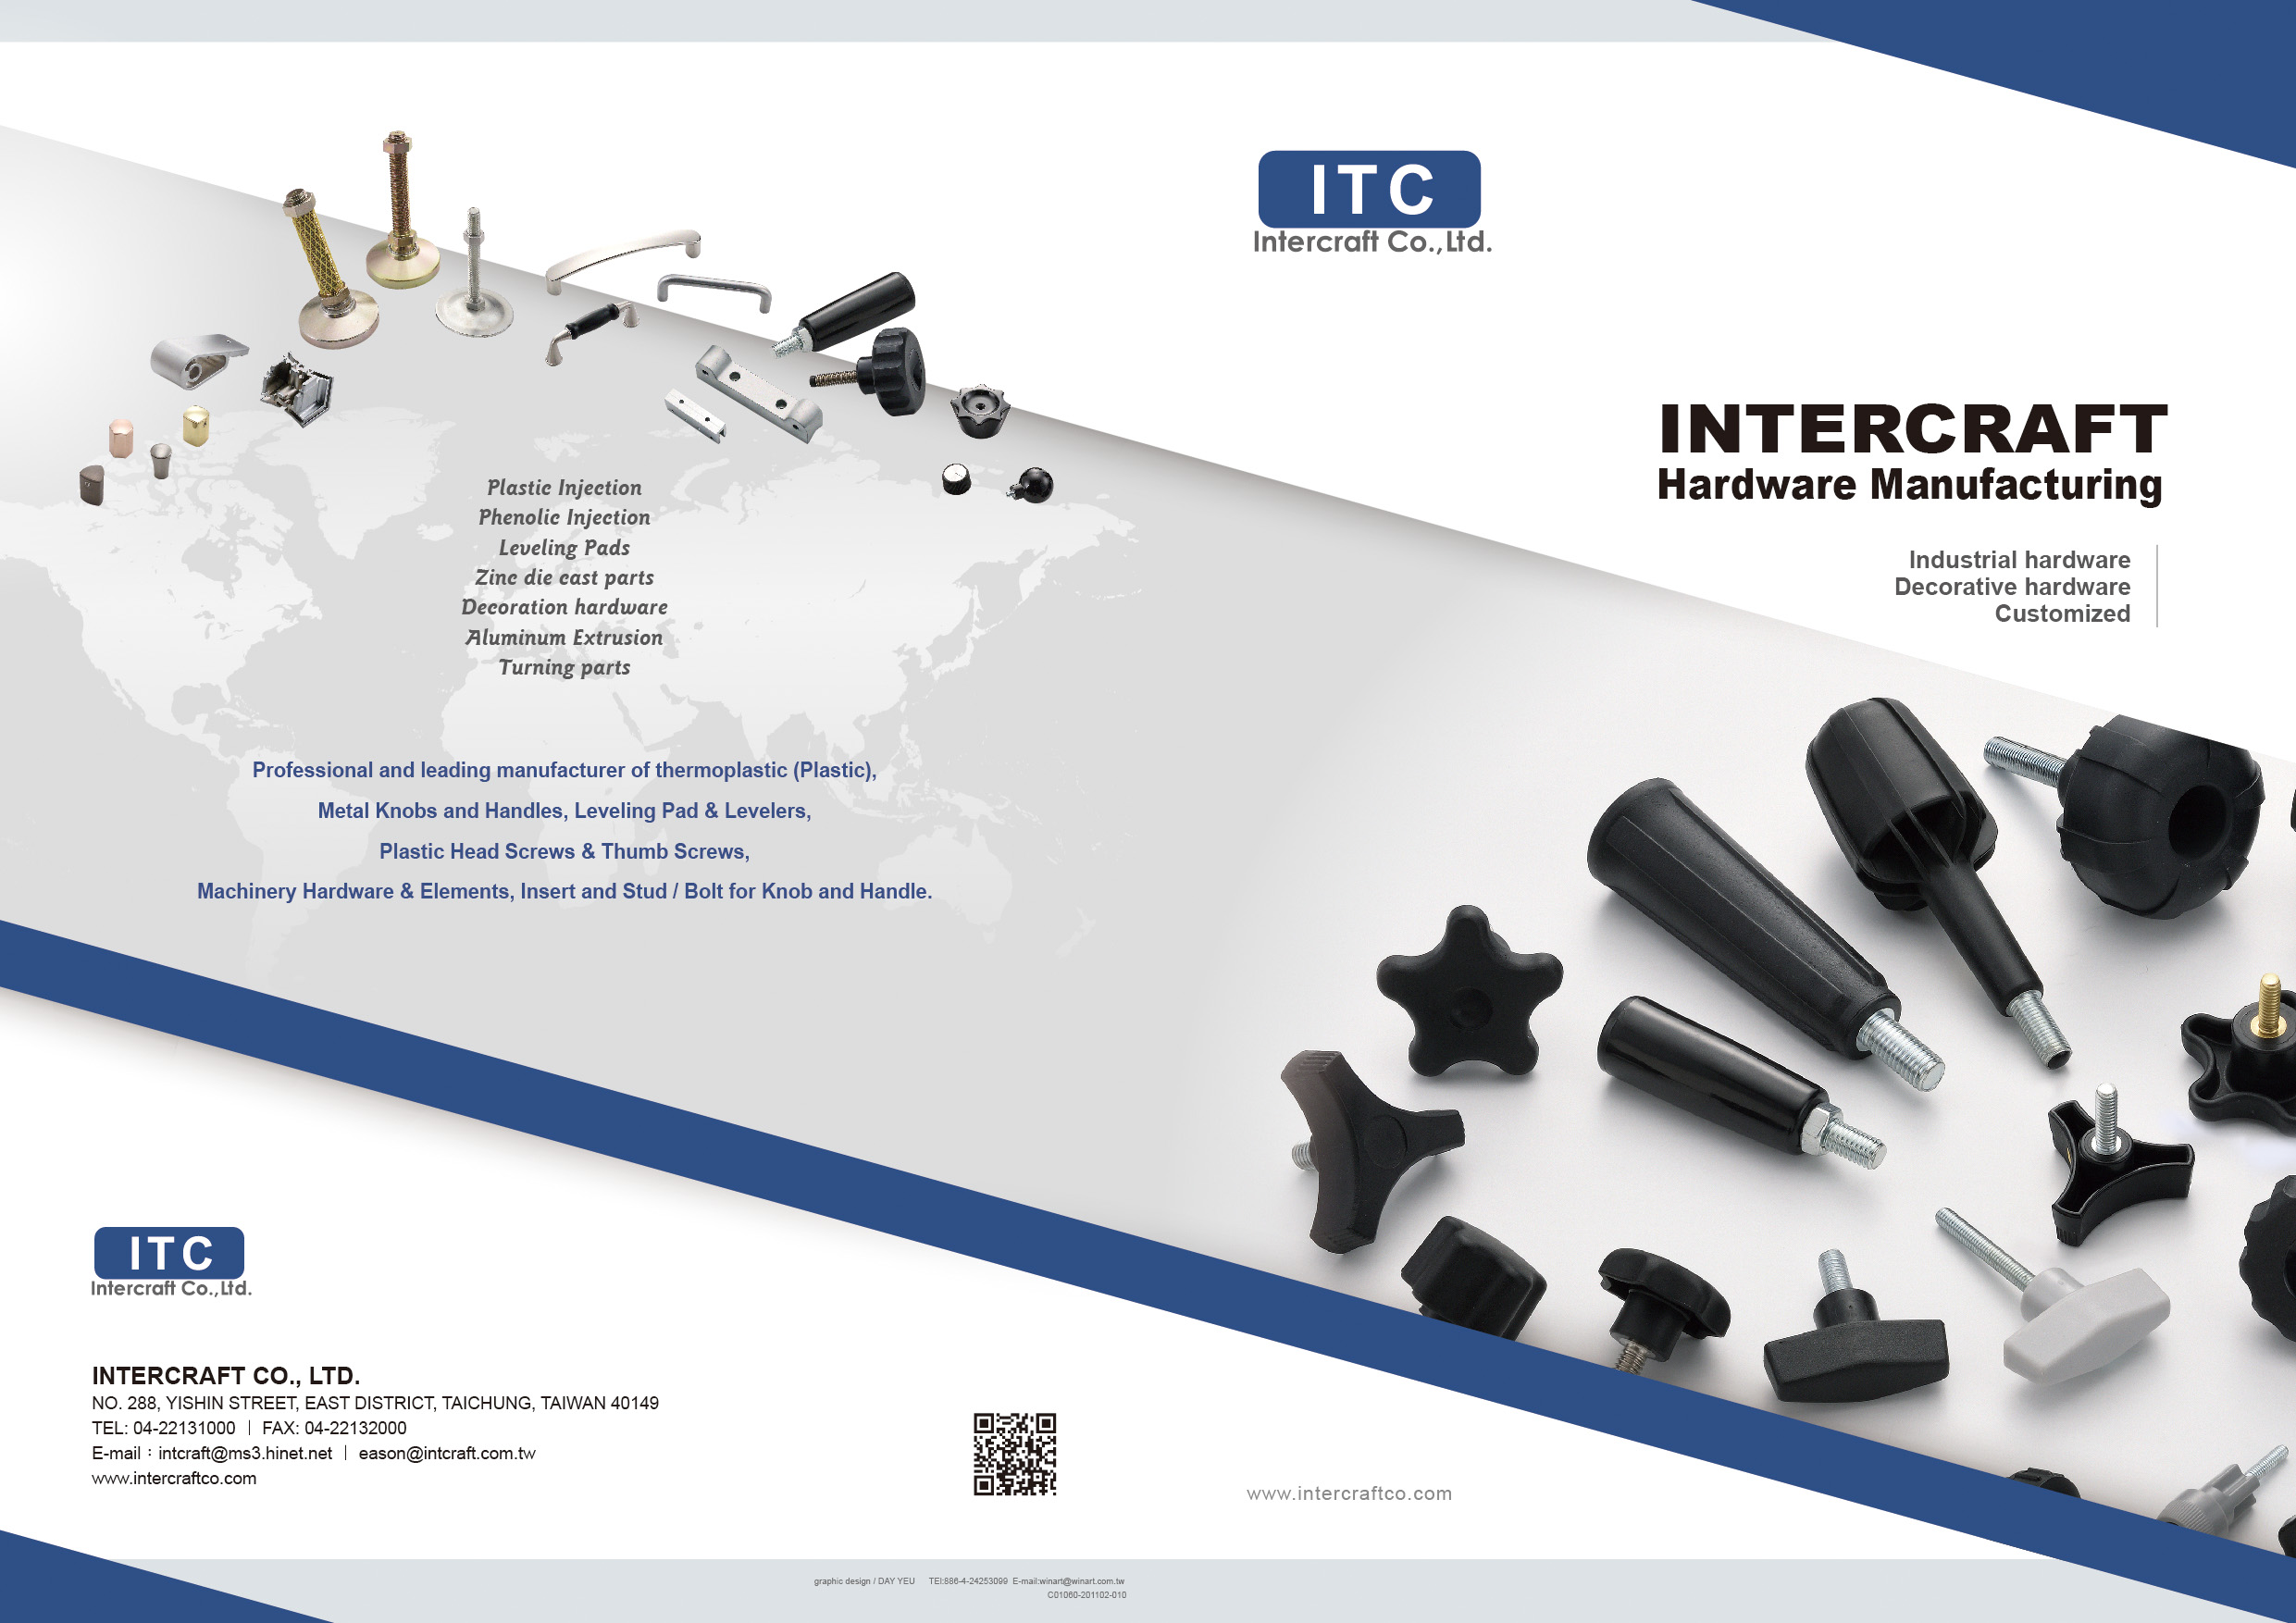 INTERCRAFT CO., LTD. Online Catalogues